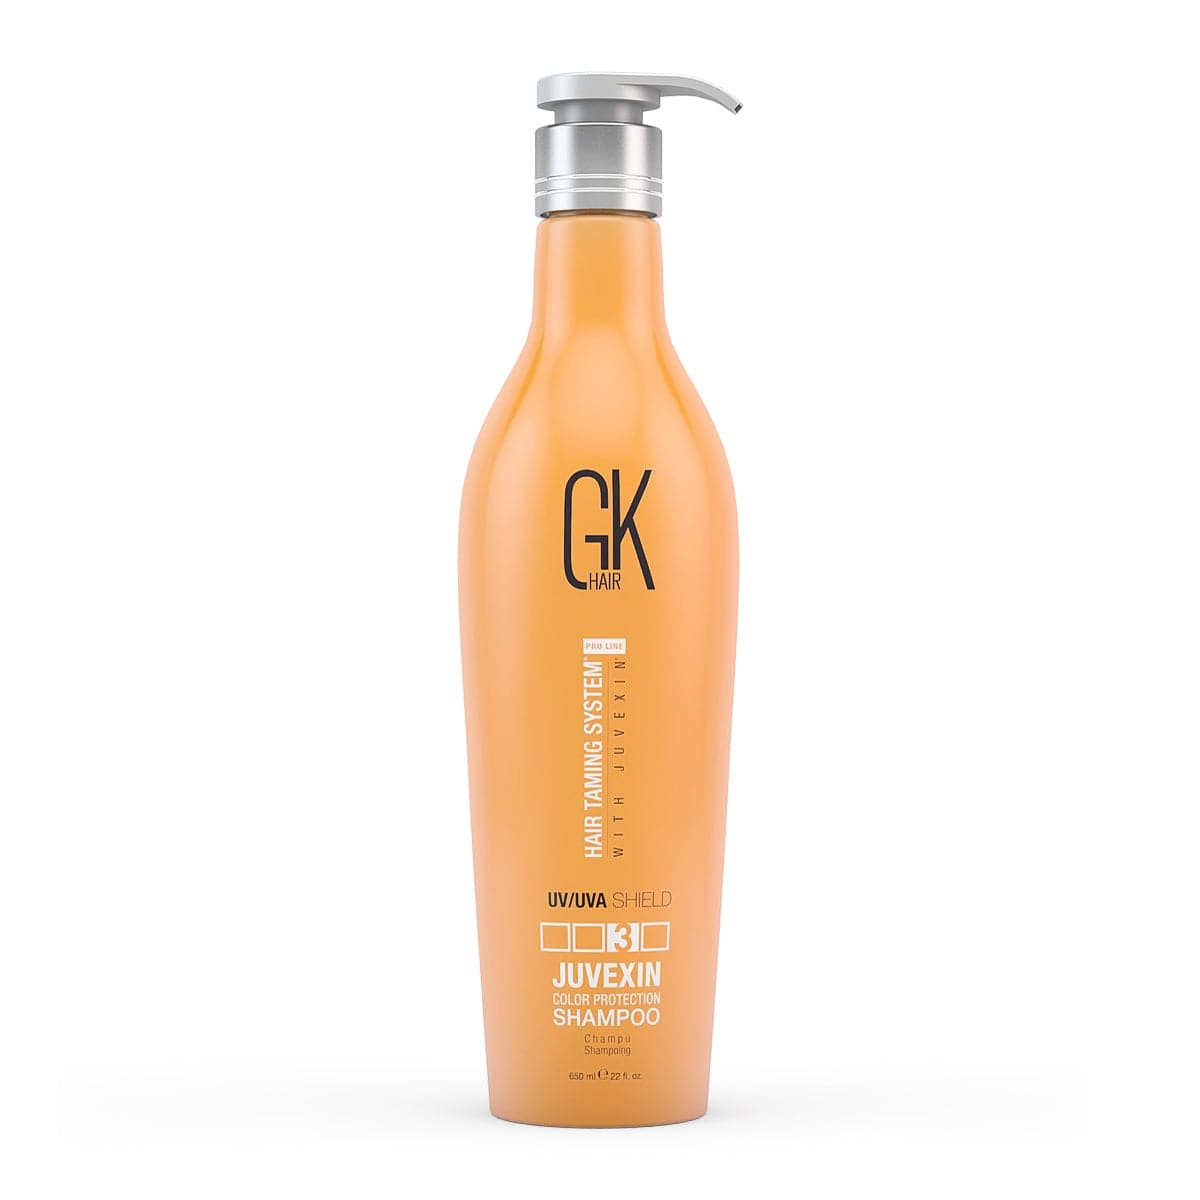 Juvexin Shield Shampoo ALOE VERA & NATURAL FLOWER SEED OILS - GK Hair 